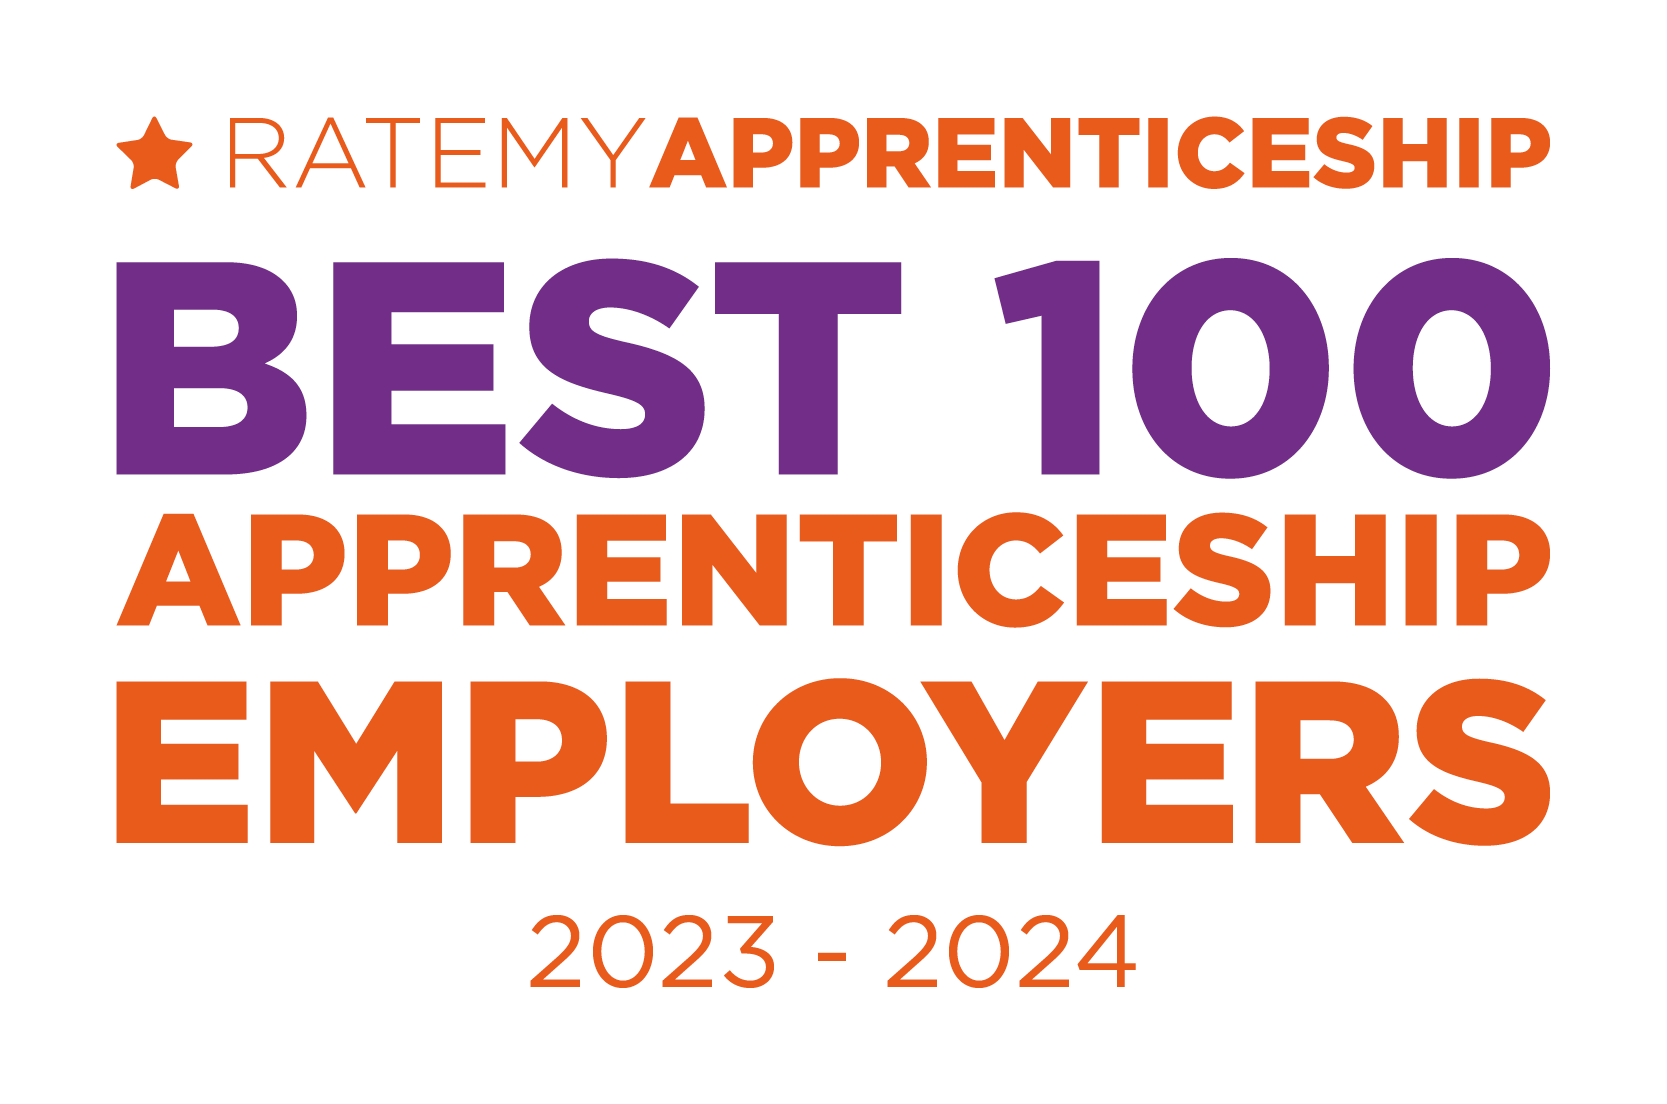 Top 100 Apprenticeship employers 2023-2024